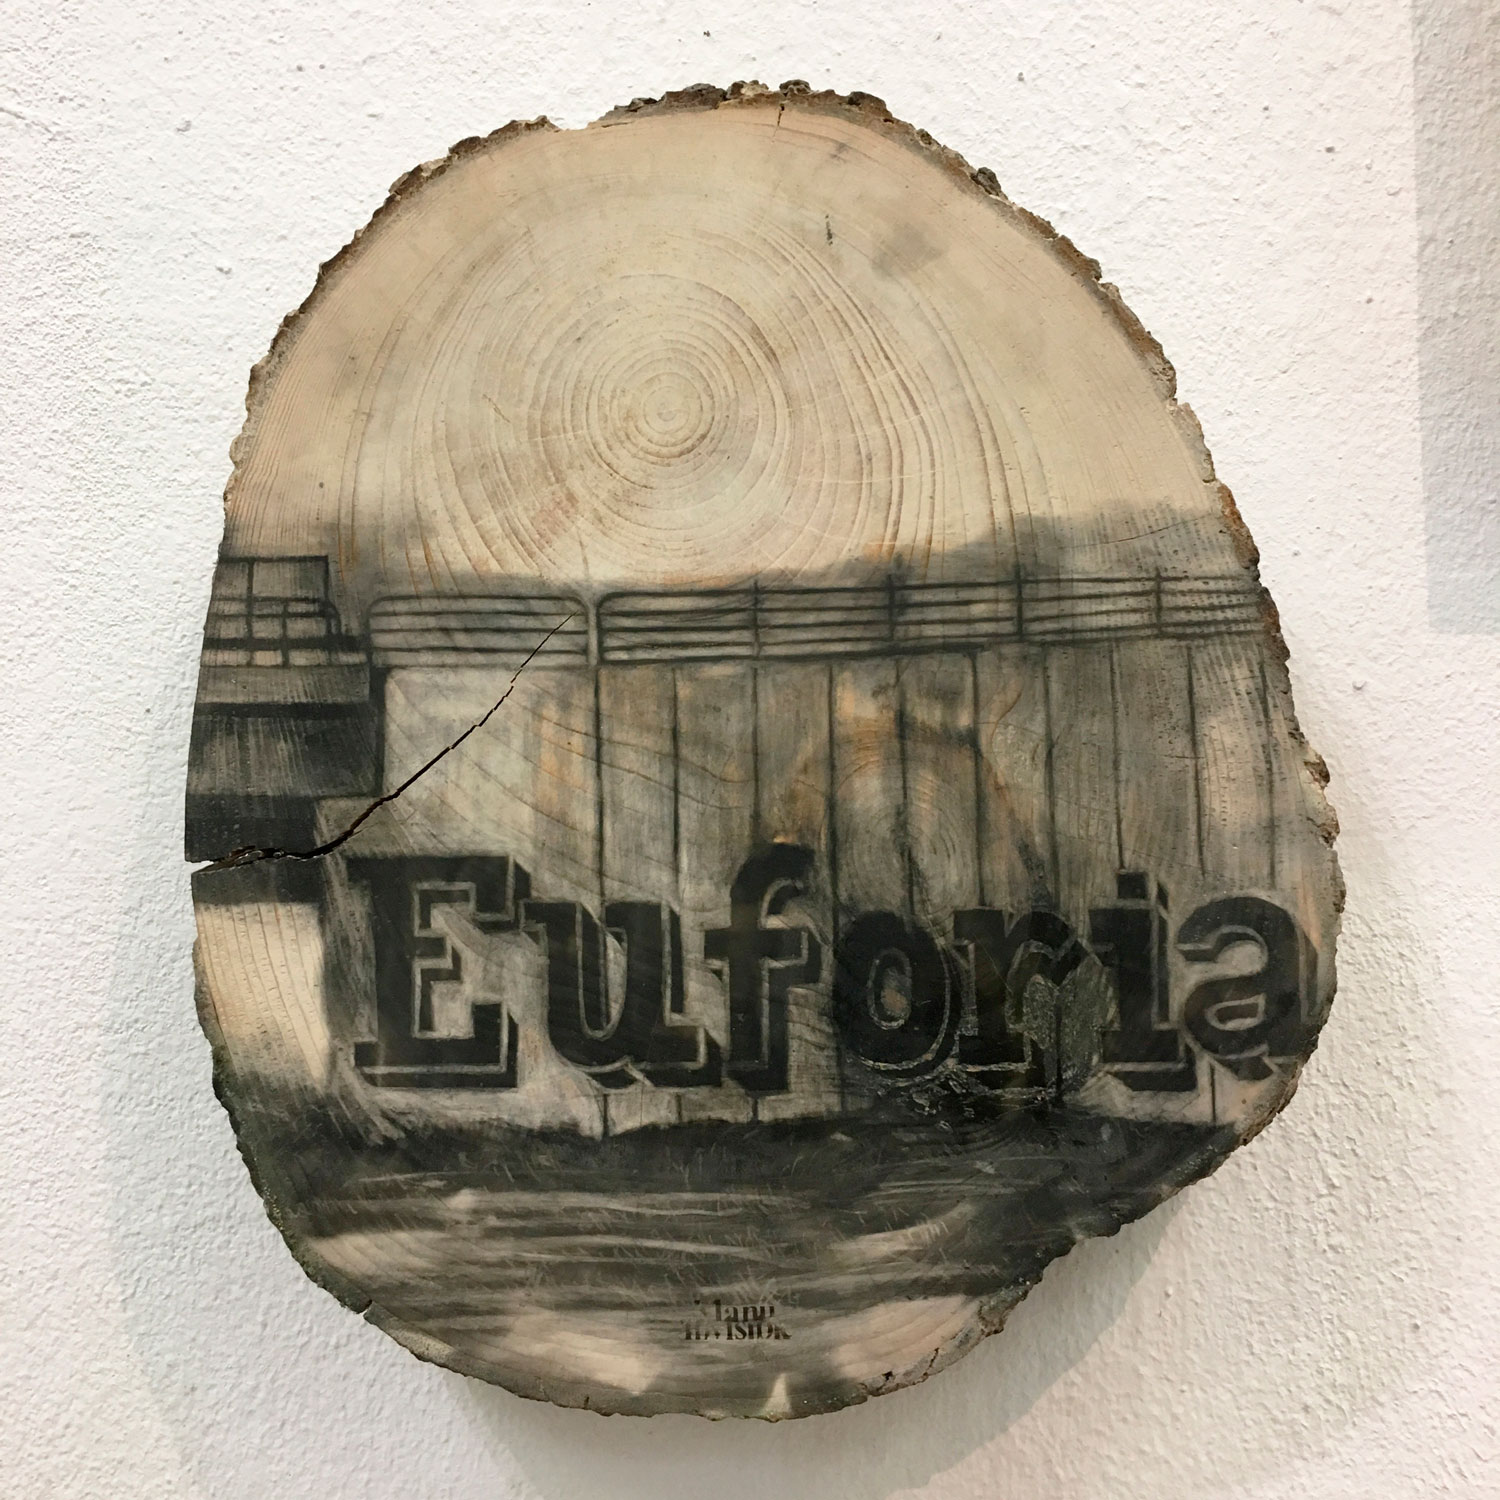 “Euforia” Smoke on wood 95 cm (circumference) x 7 cm 2017